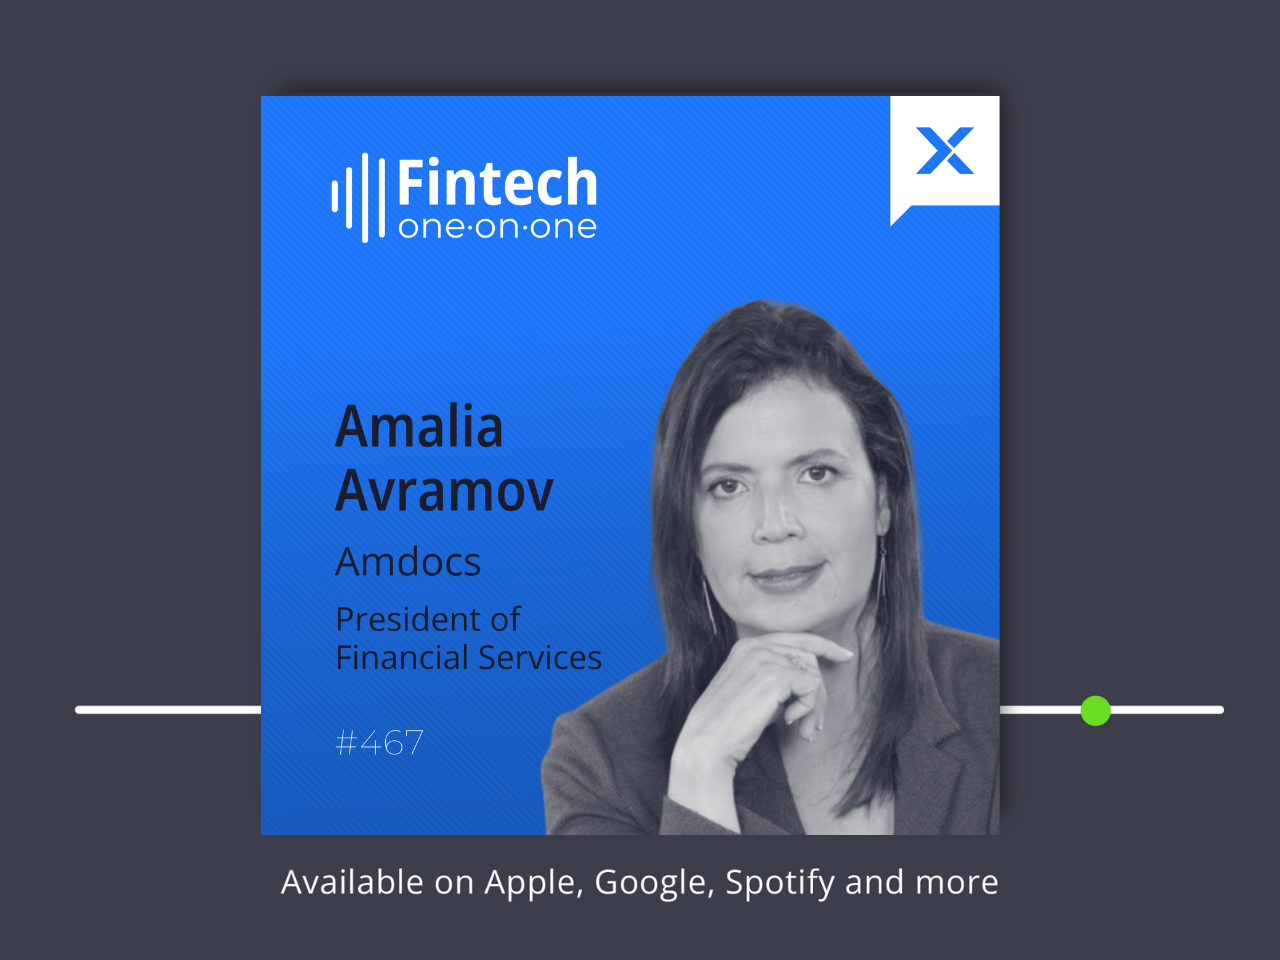 Amalia Avramov, presidenta de Servicios Financieros, Amdocs